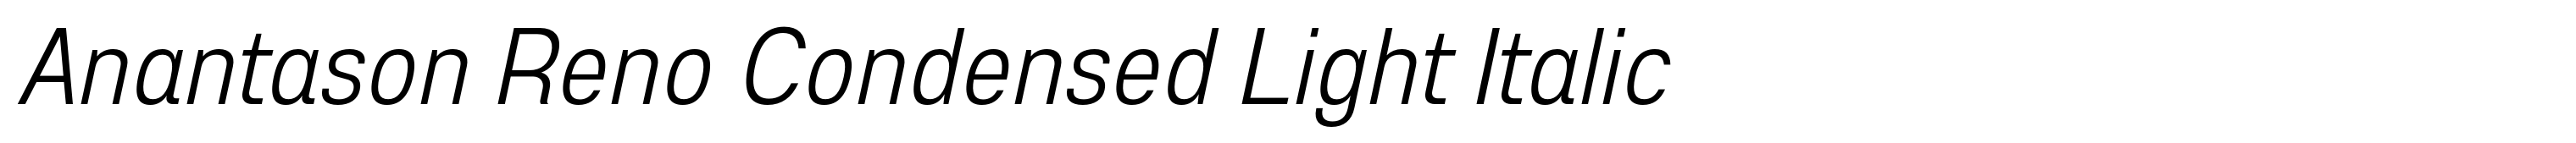 Anantason Reno Condensed Light Italic